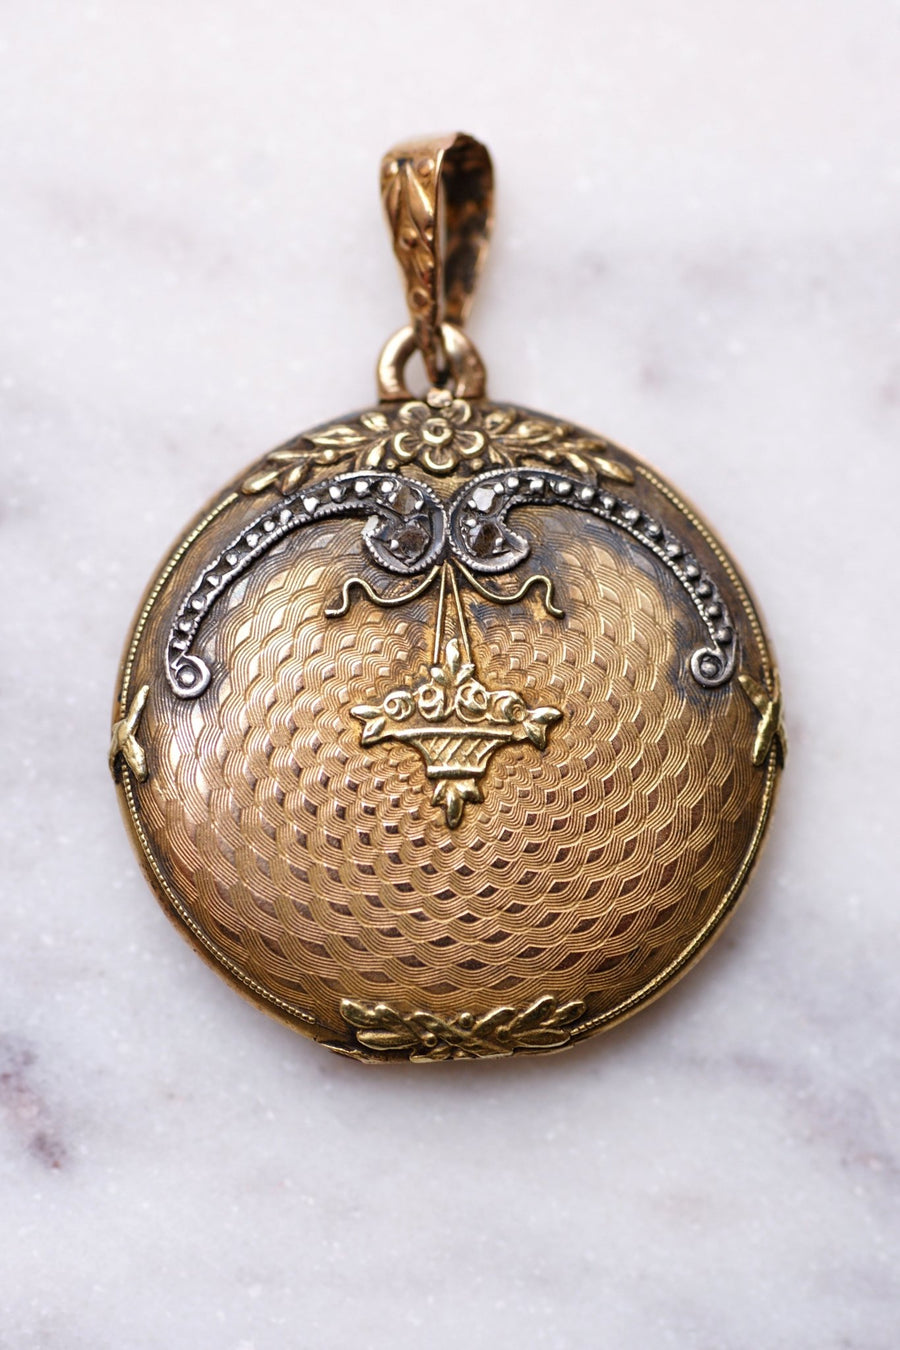 Belle Epoque gold and diamonds photo pendant with medallion - Galerie Pénélope